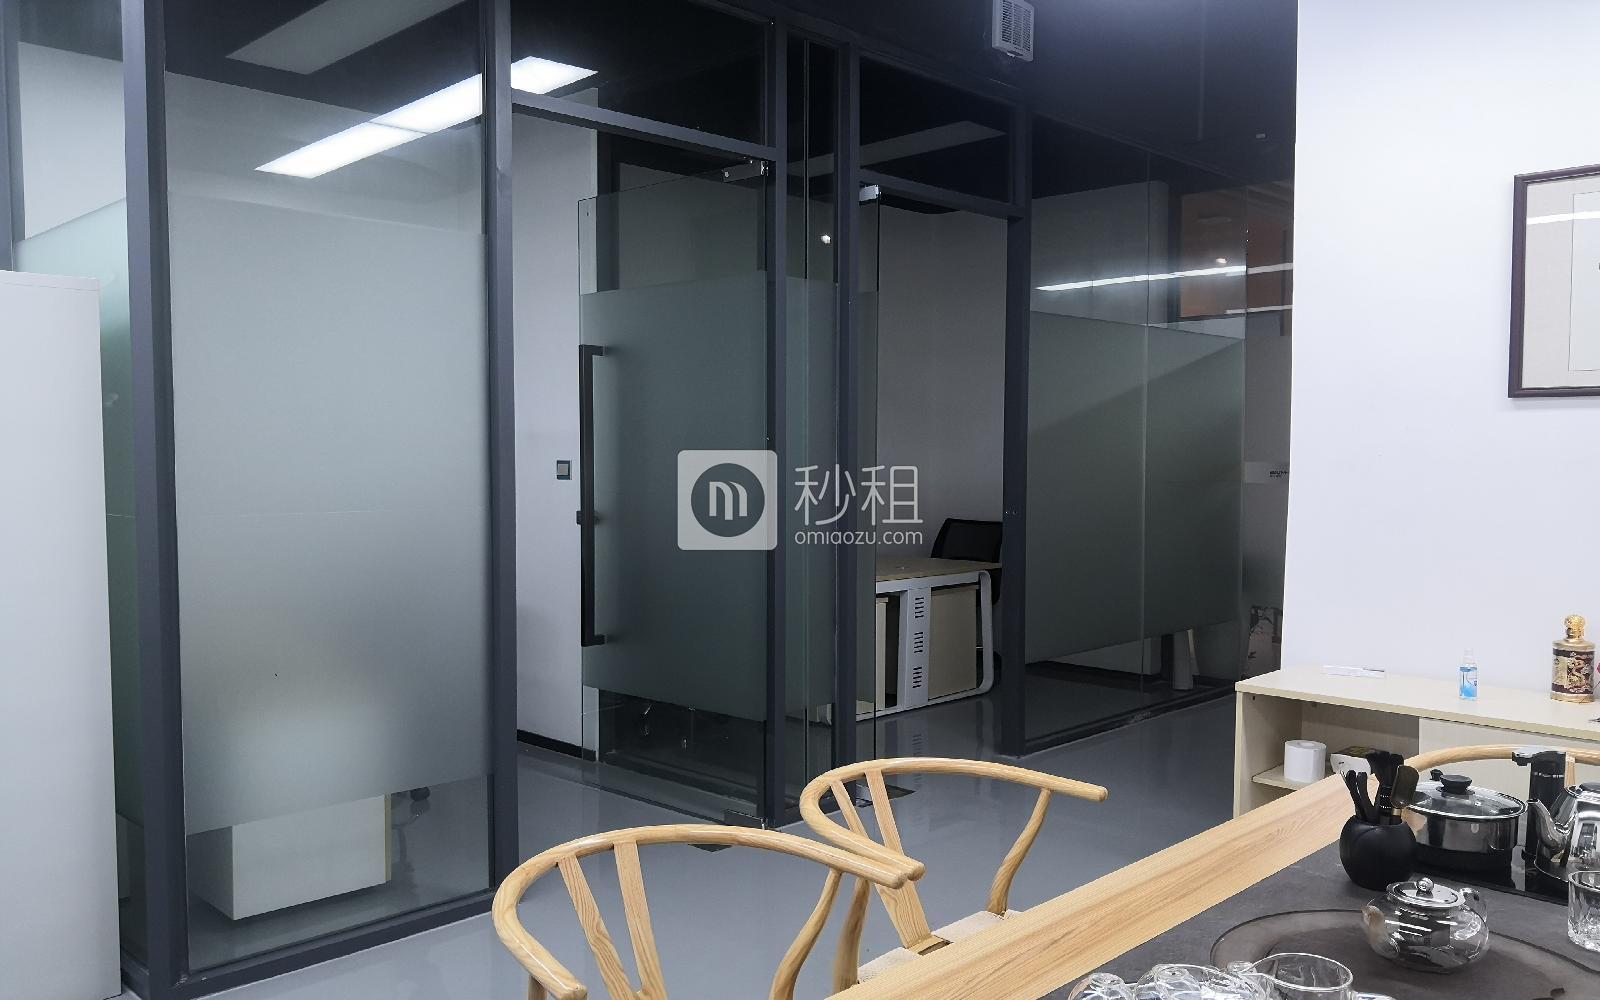  U优·优客工场写字楼出租106平米精装办公室53元/m².月